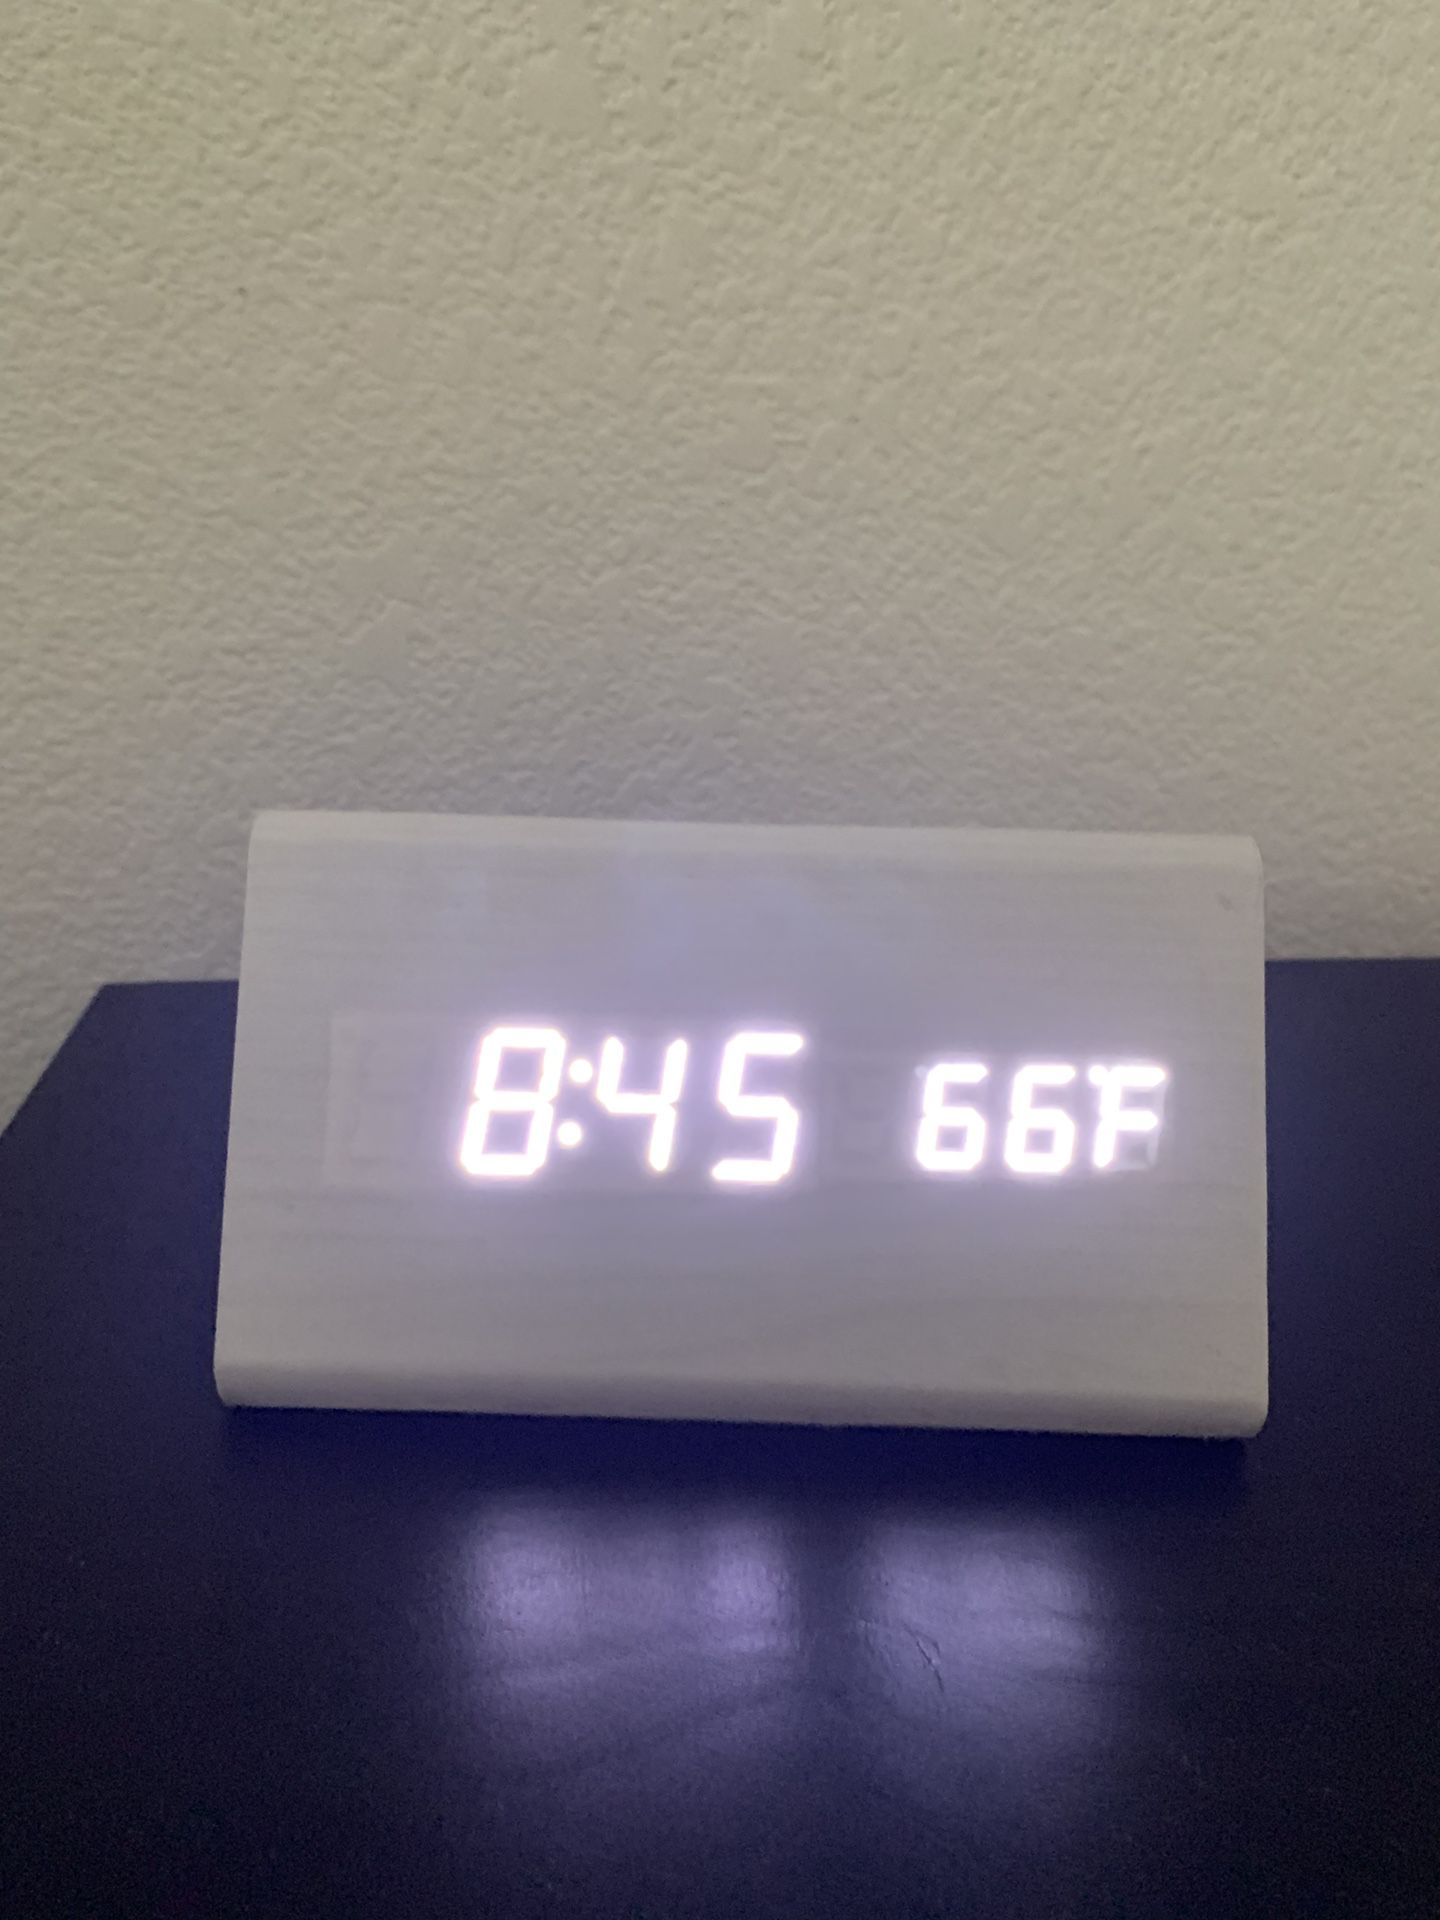 Modern white wooden digital clock with temp display